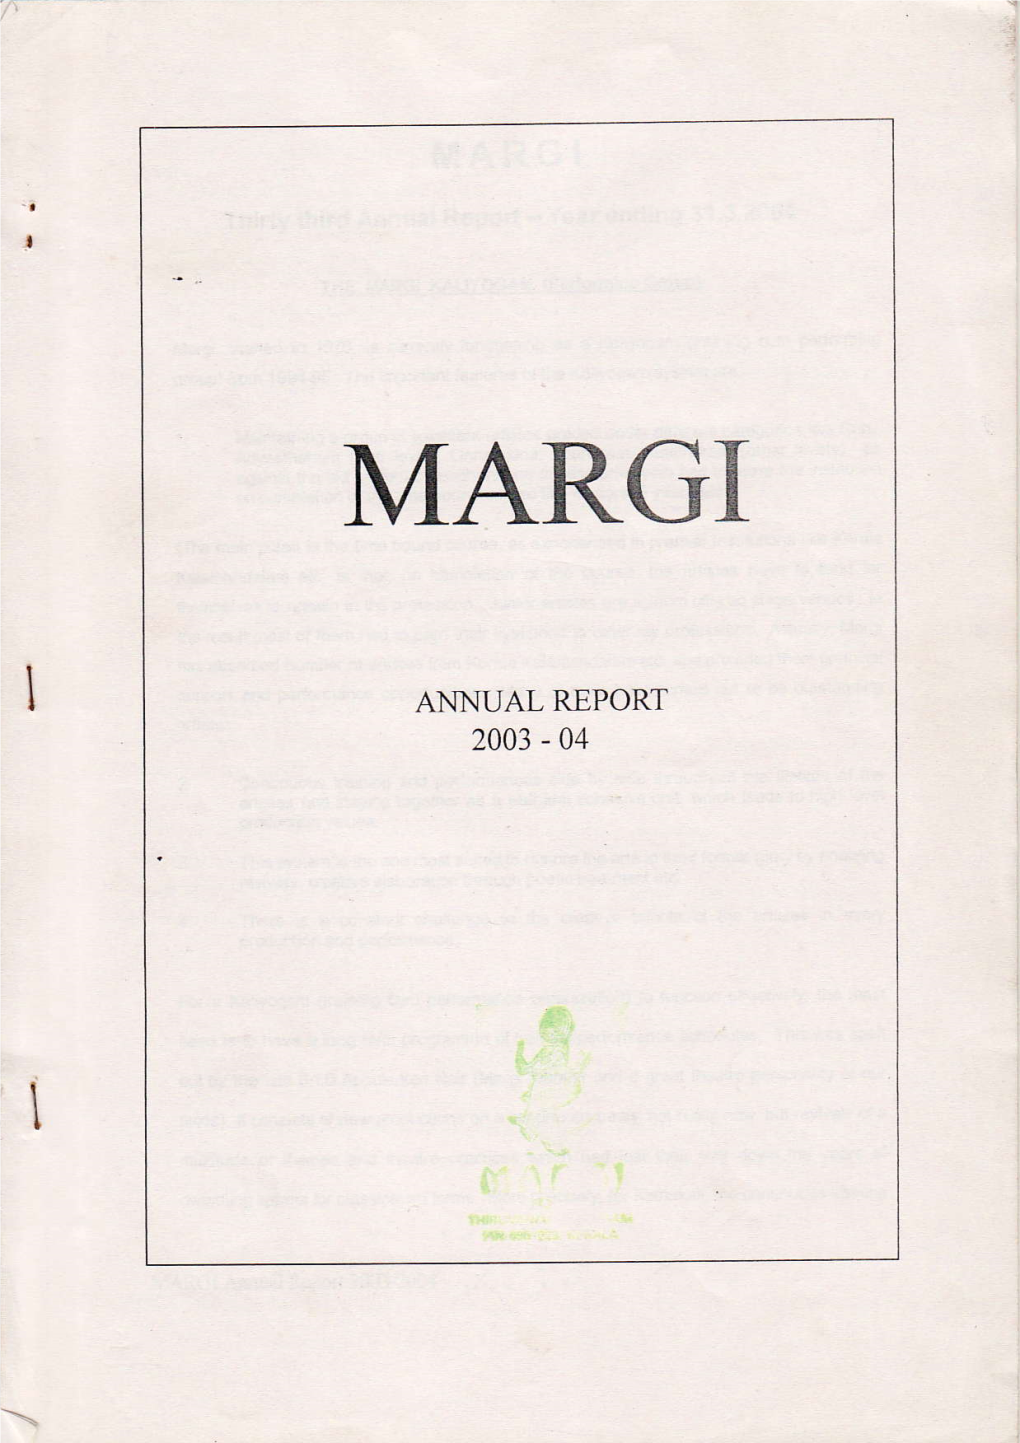 Annual Report 2003- 04